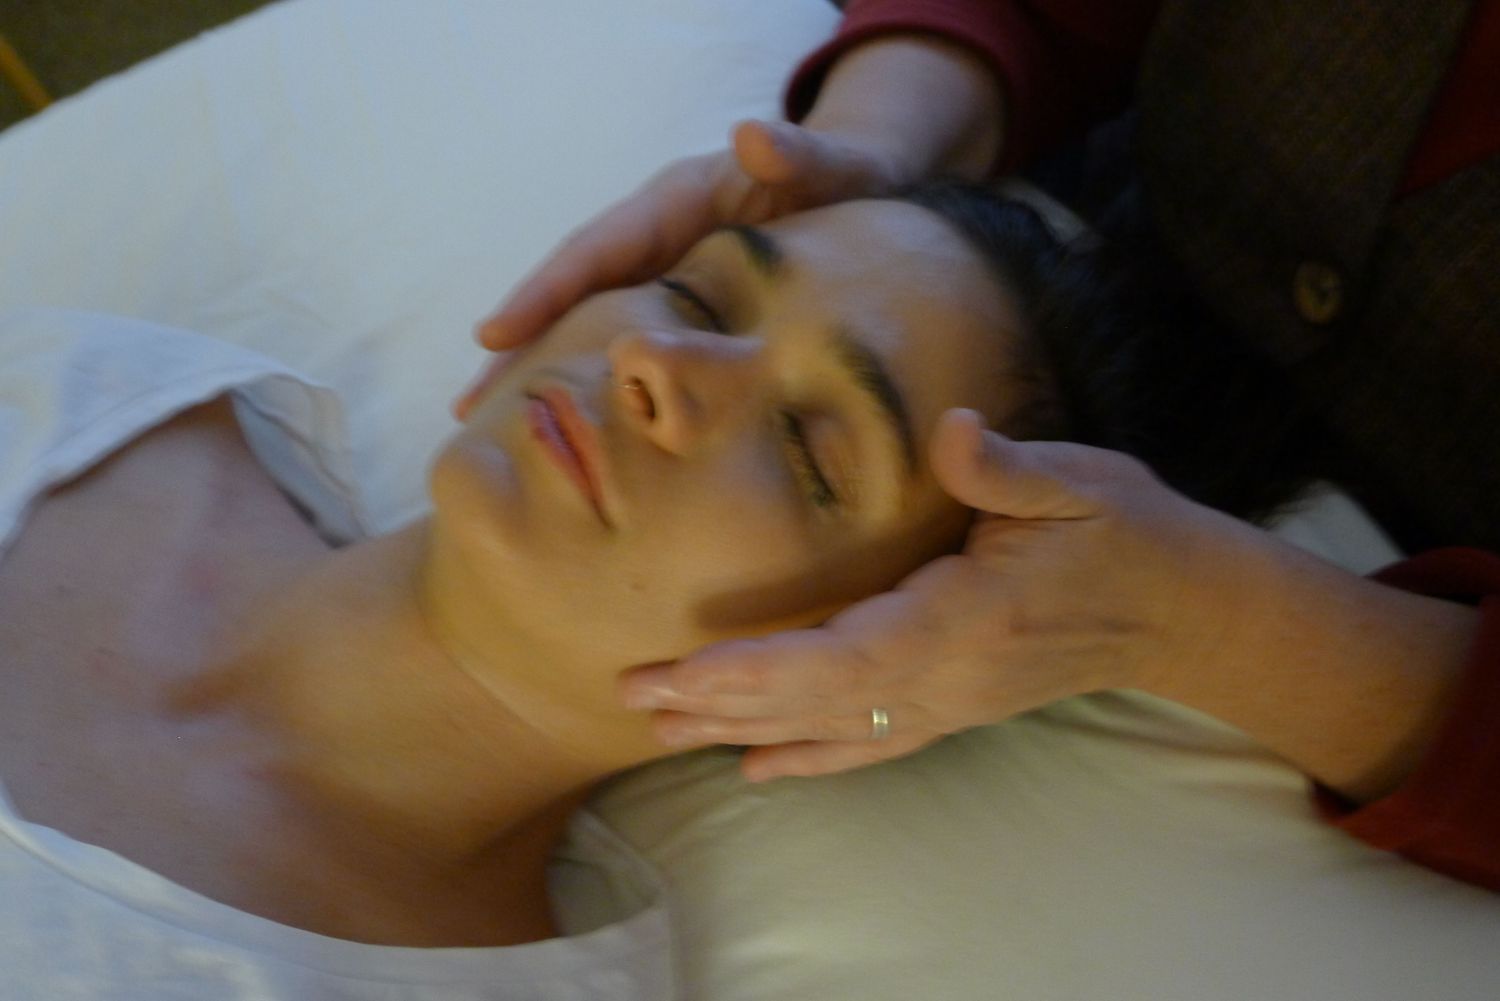 Gallery Photo of TMJ Massage